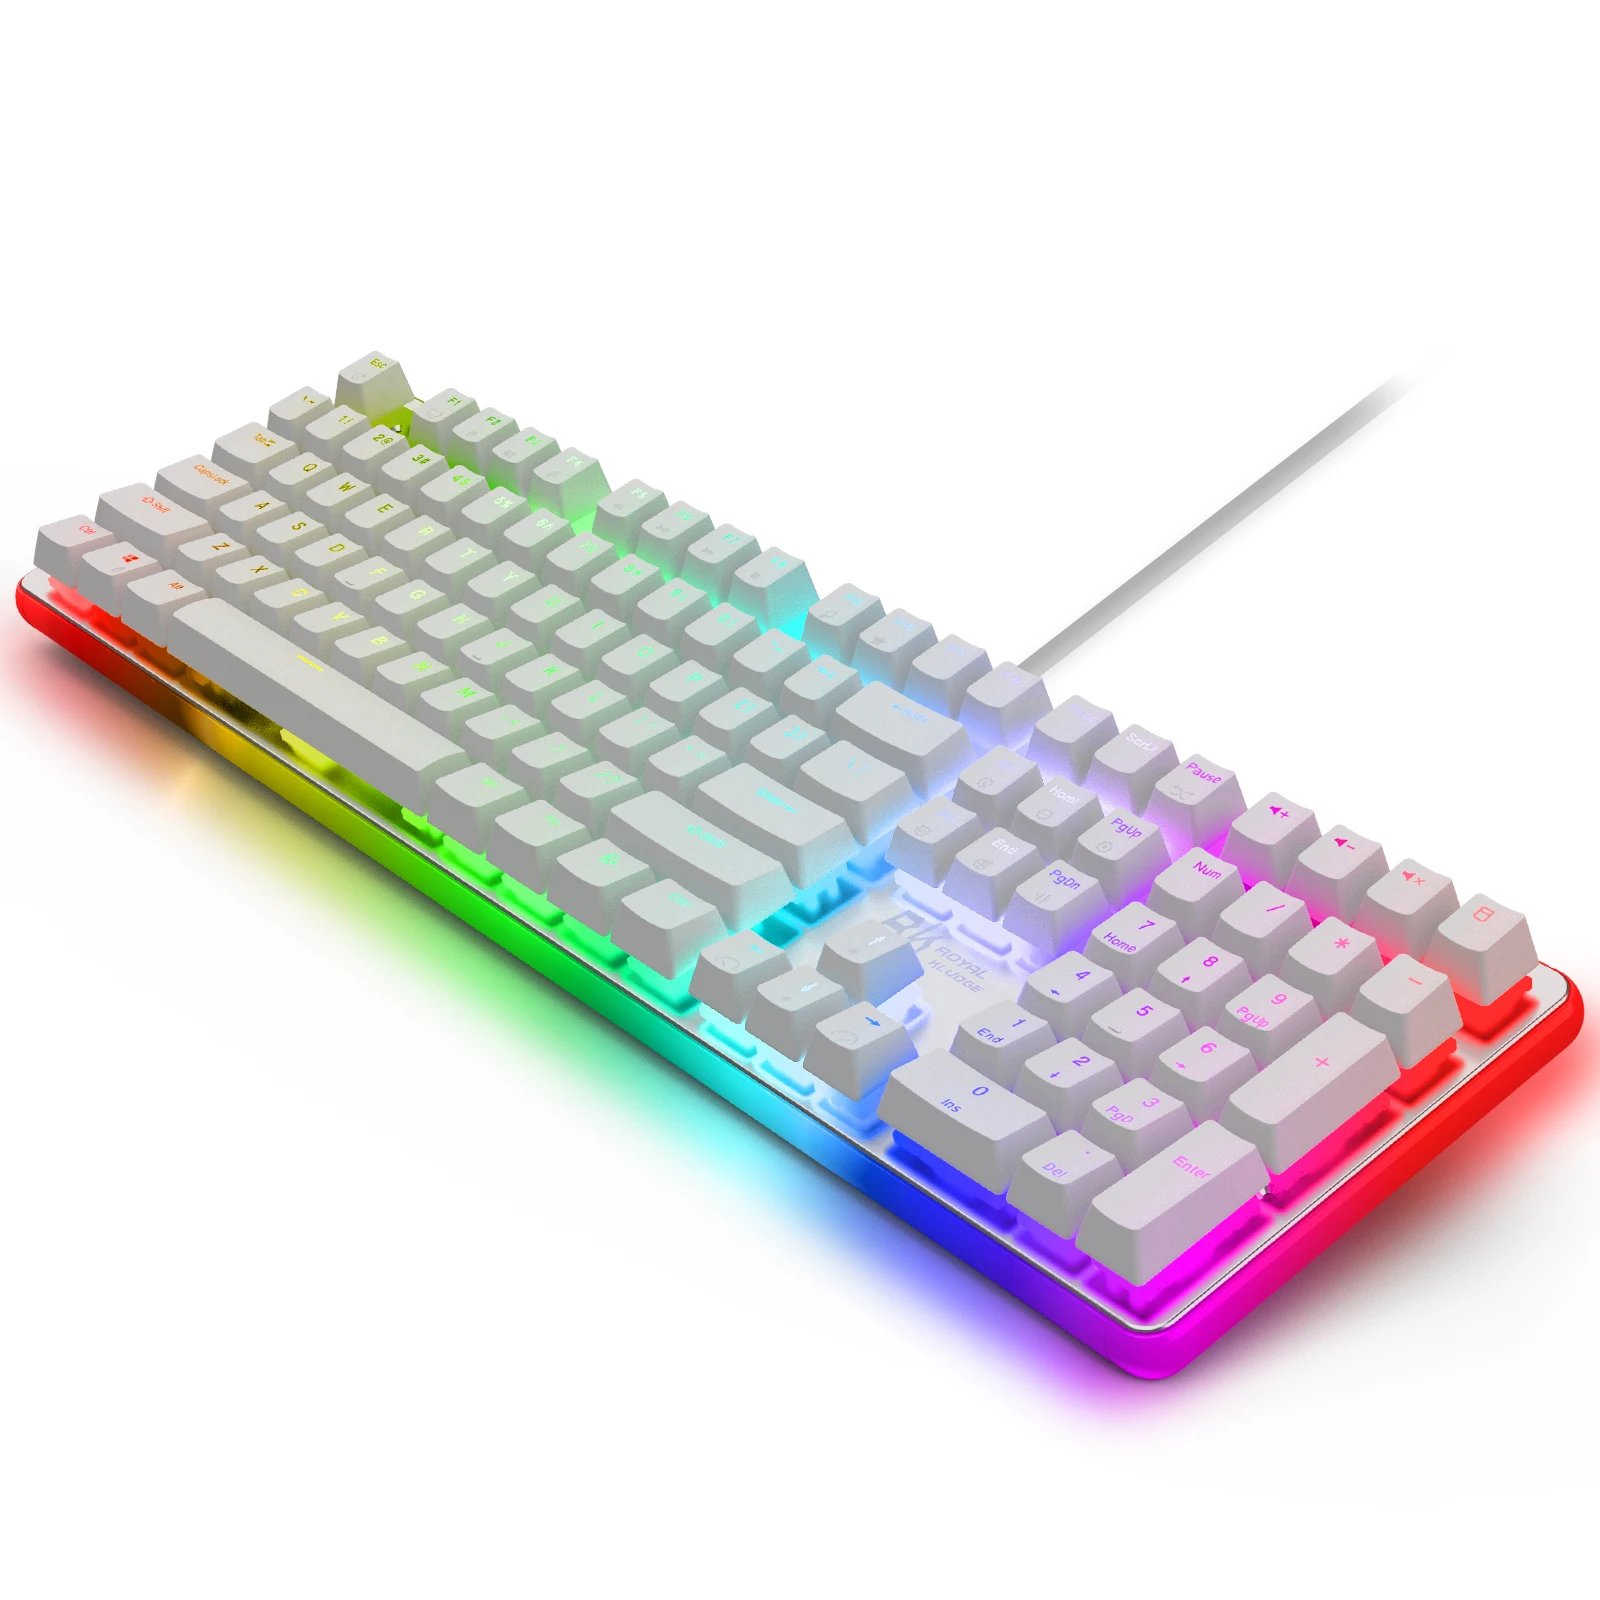 RK918 Wired Mechanical Keyboard, RGB Backlit Gaming Keyboard Large LED Sorrounding Side Lamp, Full Size 108 Keys Pudding Keycap